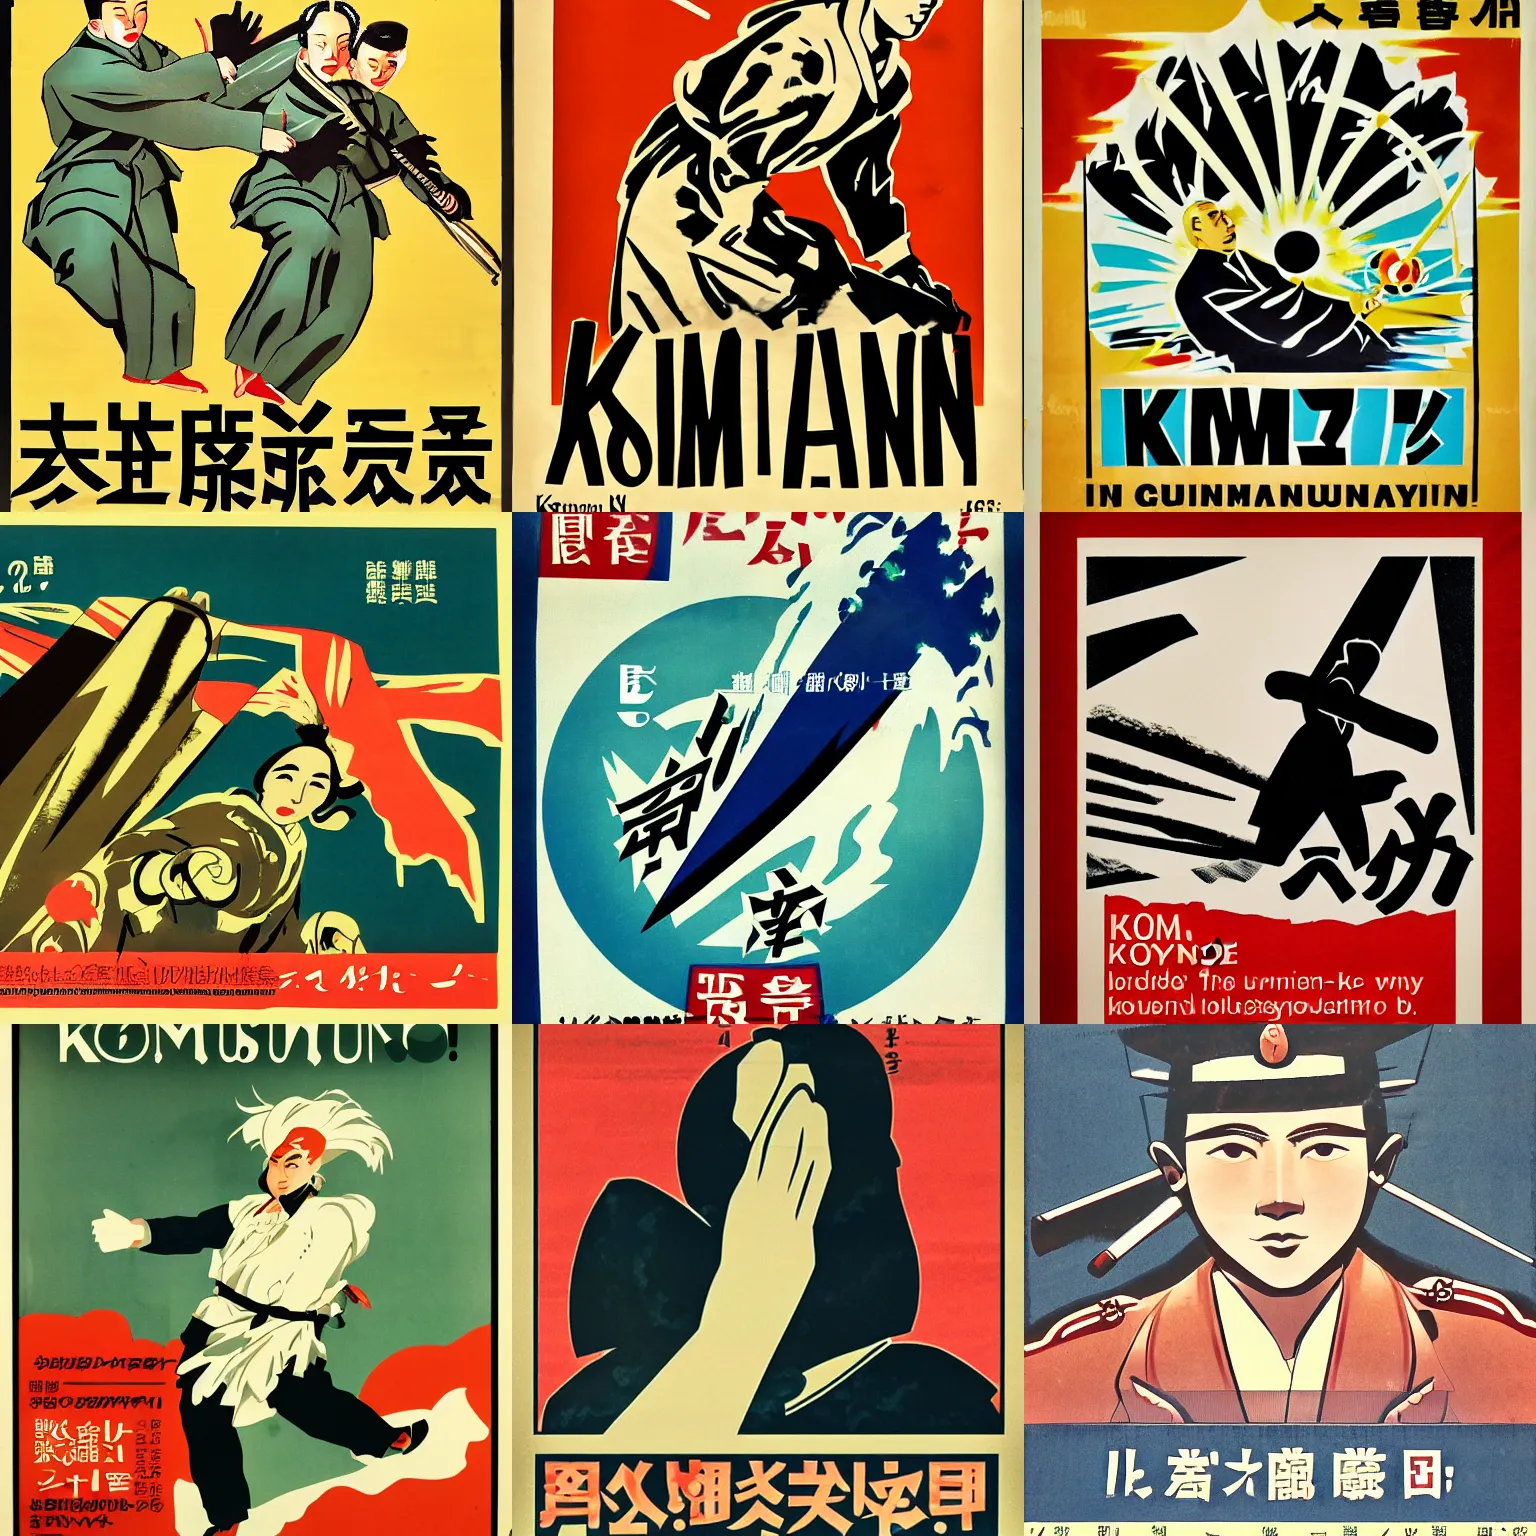 Prompt: komsunun tavugu komsuya kaz gorunur, in the style of propaganda poster